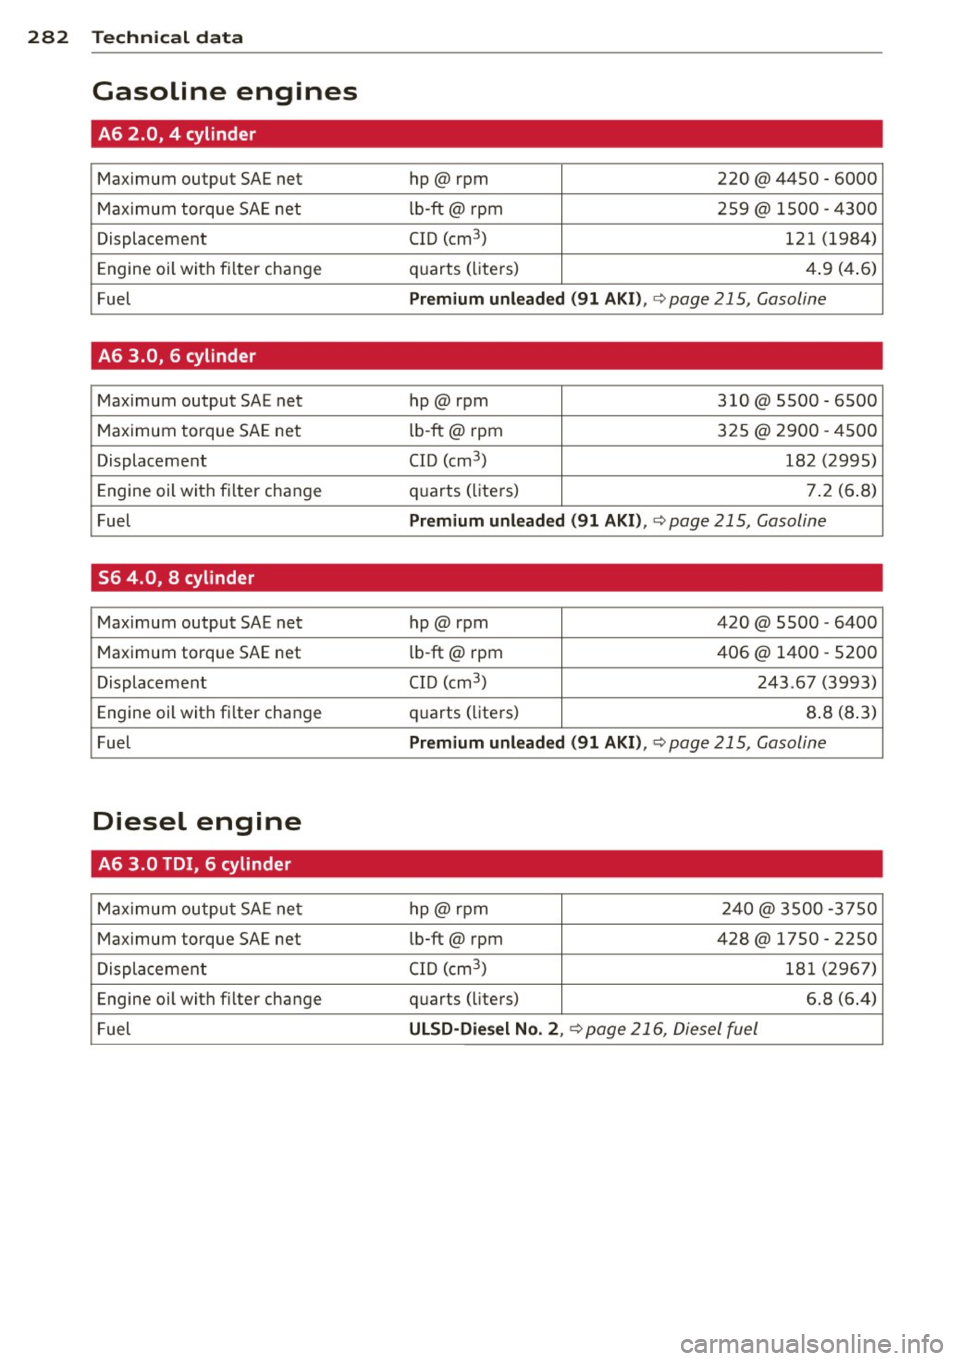 AUDI S6 2014  Owners Manual 282  Technical  data 
Gasoline  engines 
A6  2.0,  4  cylinder 
Maximum  output  SAE net  hp@rpm 220  @ 4450  - 6000 
Max imum  torque  SAE net  lb-ft@  rpm  259@  1500 
-4300 
Displacement  CID (cm
3